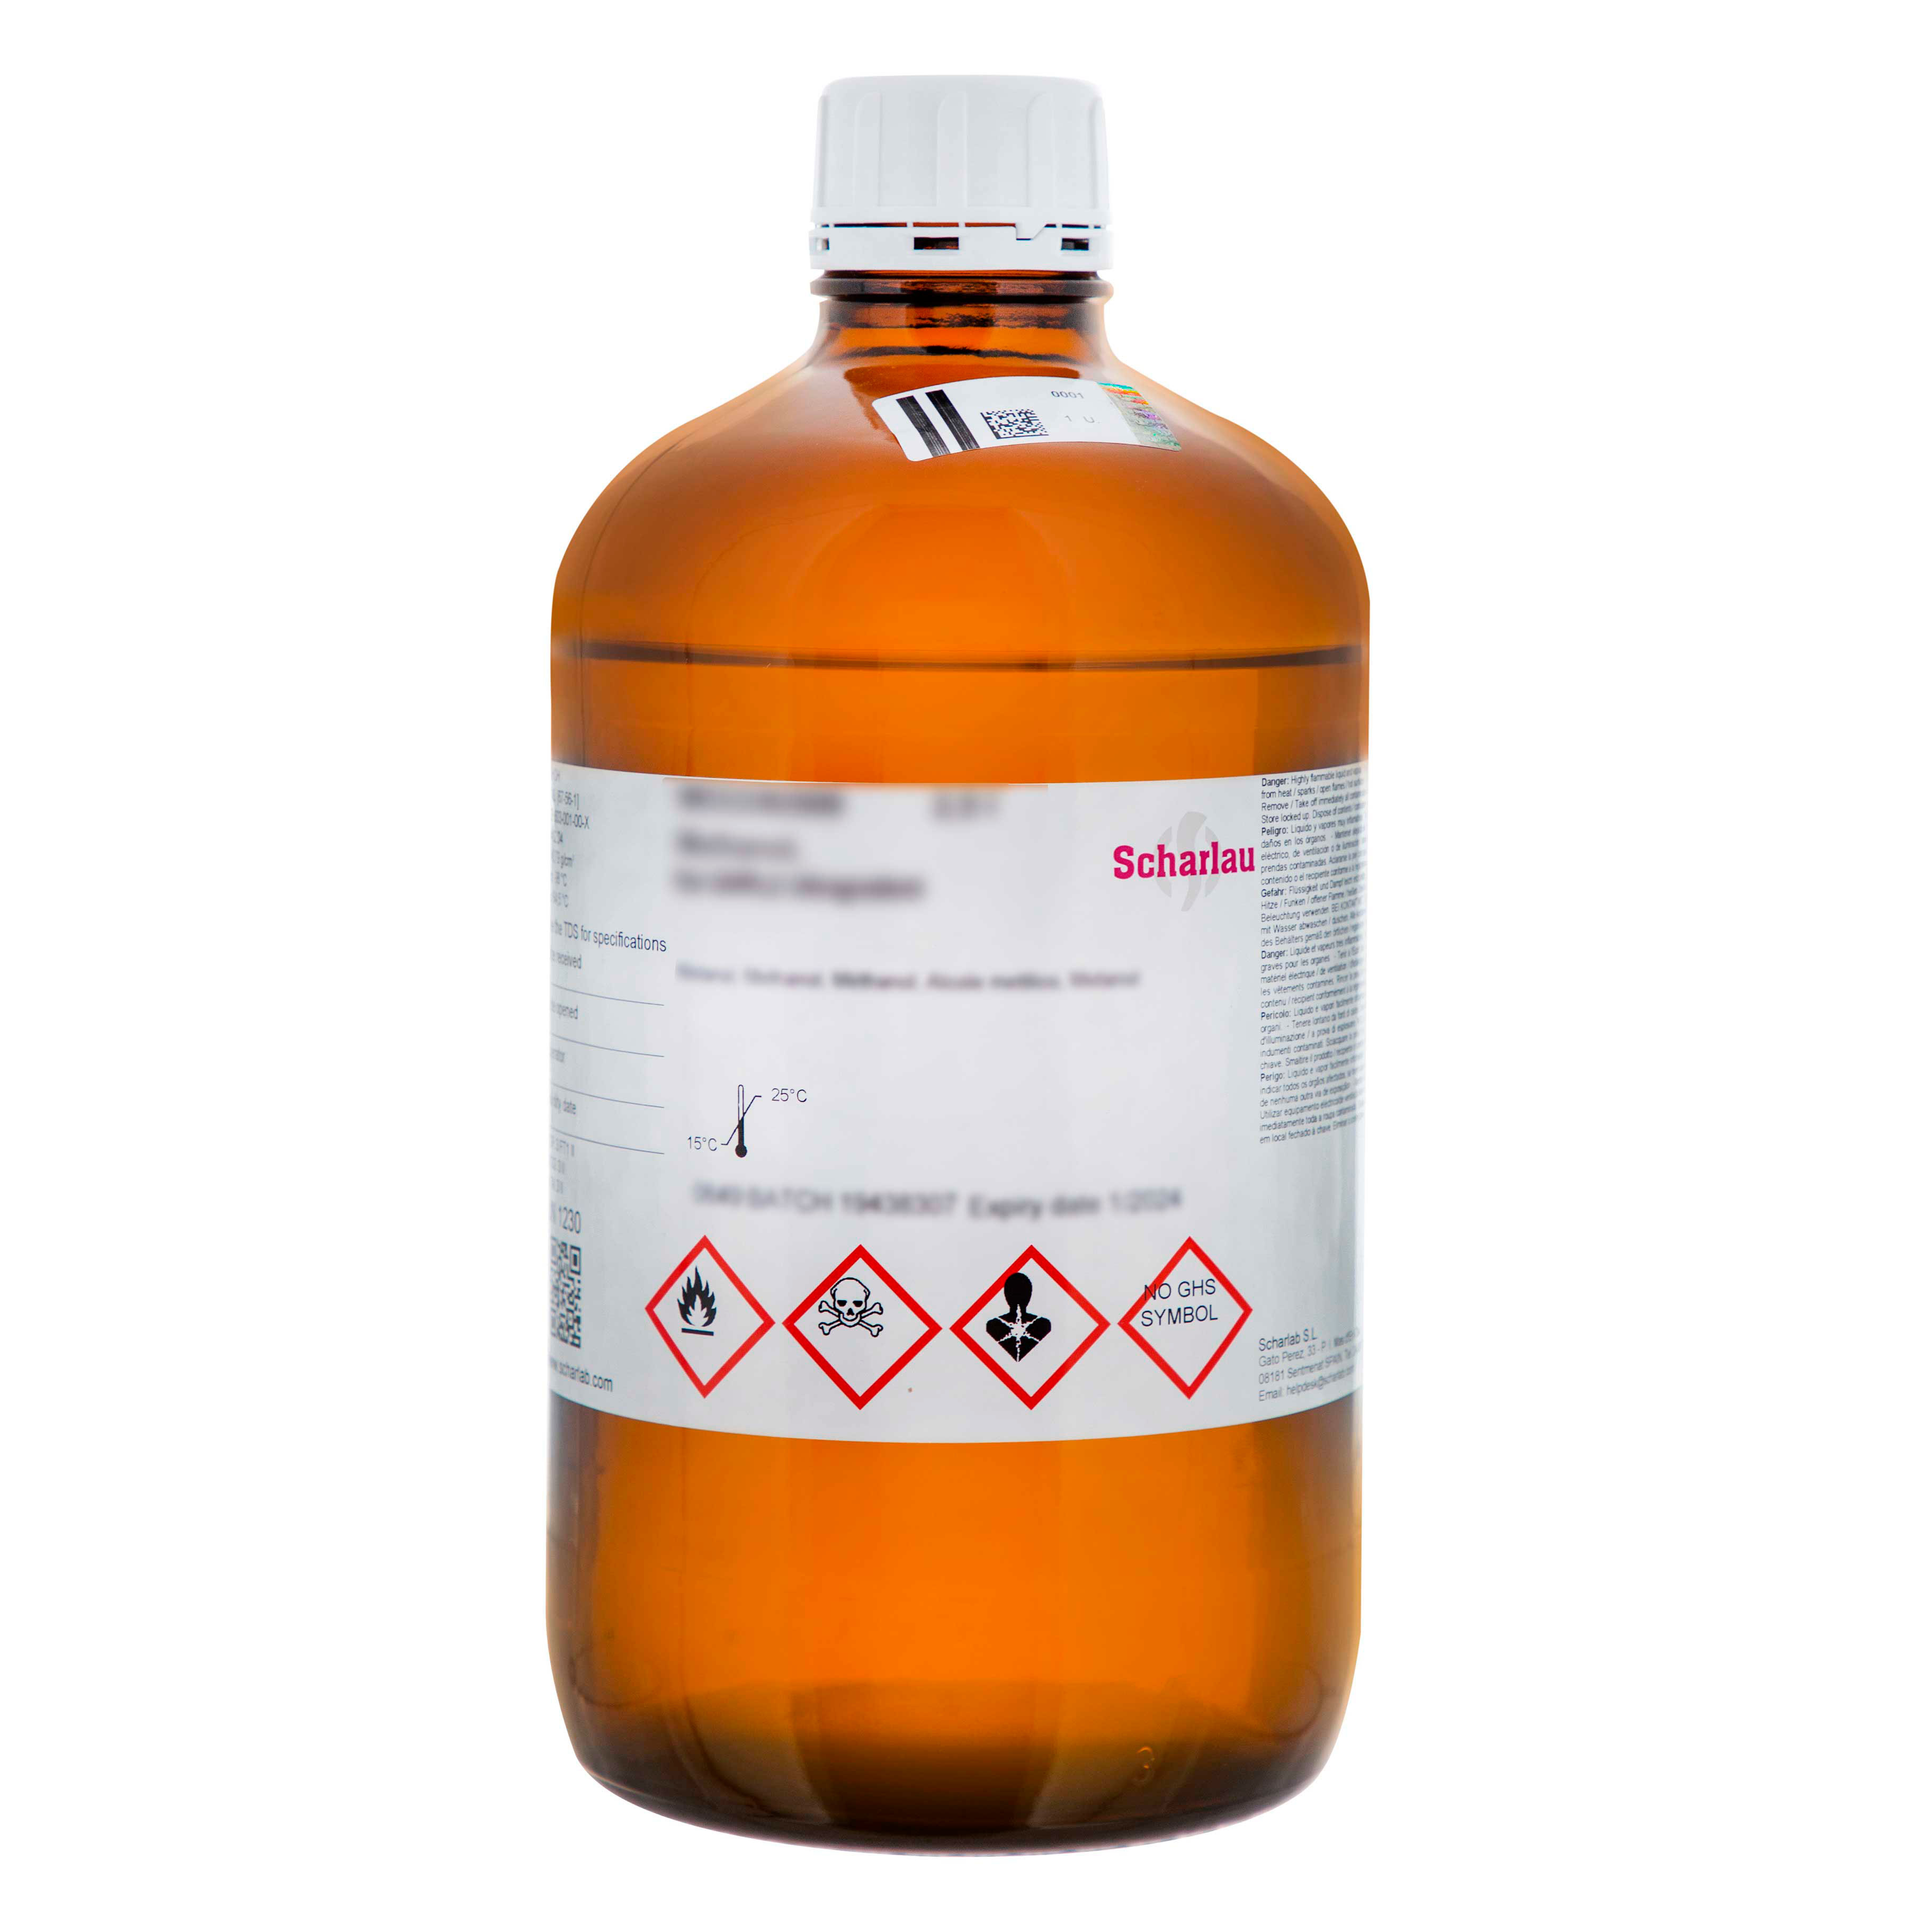 Éter dietílico, estabilizado con aprox. 7 ppm de 2,6-Di-terc-butil-4-metilfenol (BHT), Multisolvent®  ACS  ISO, Etiléter